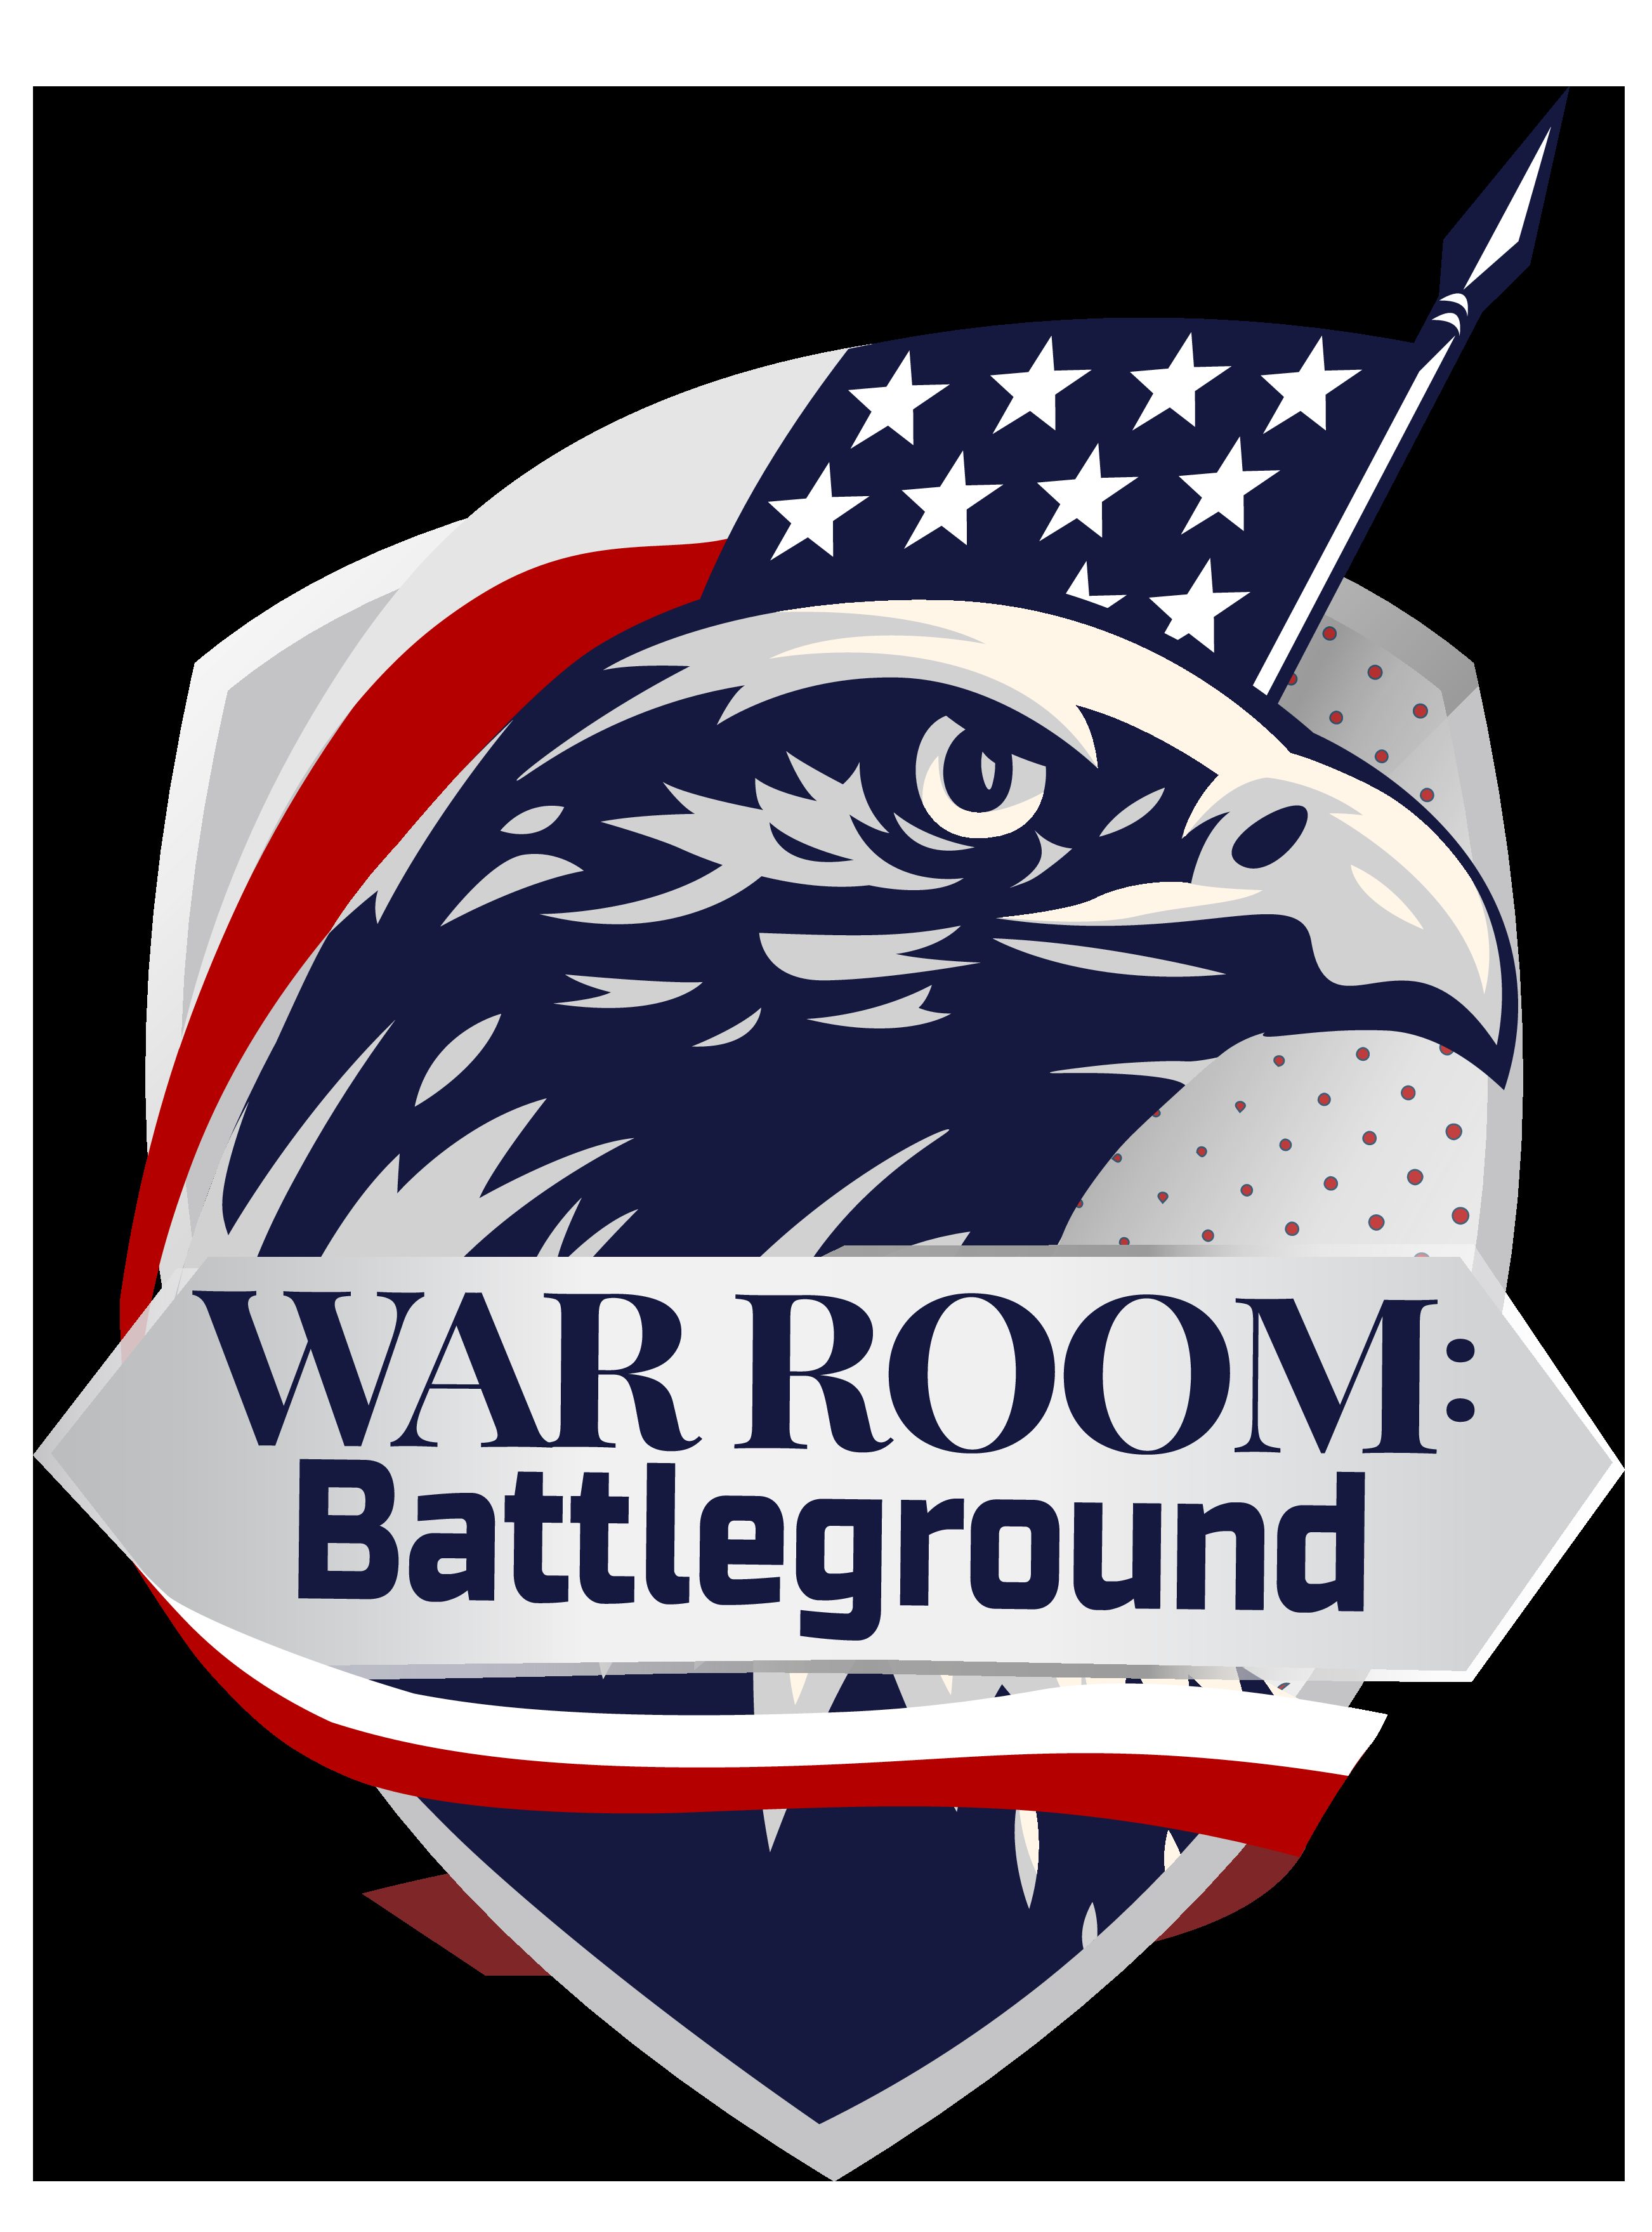 WarRoom Battleground EP 250: 419-0 Calls For Investigations Into Covid-19